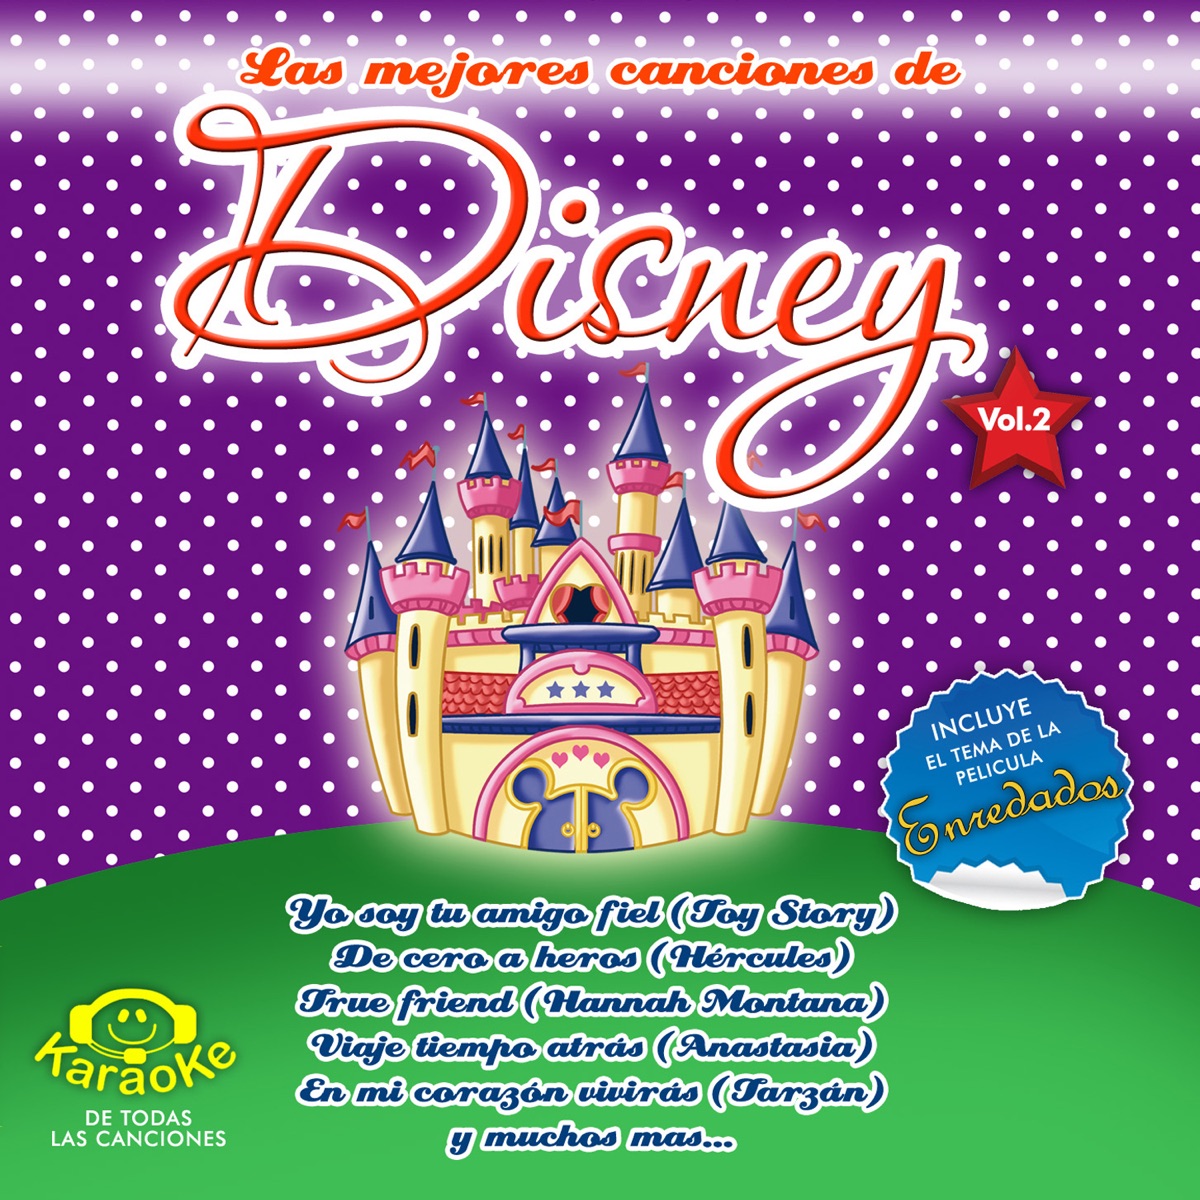 Las Mejores Canciones de Disney, Vol. 2 - Album by Chiqui Chiquititos -  Apple Music